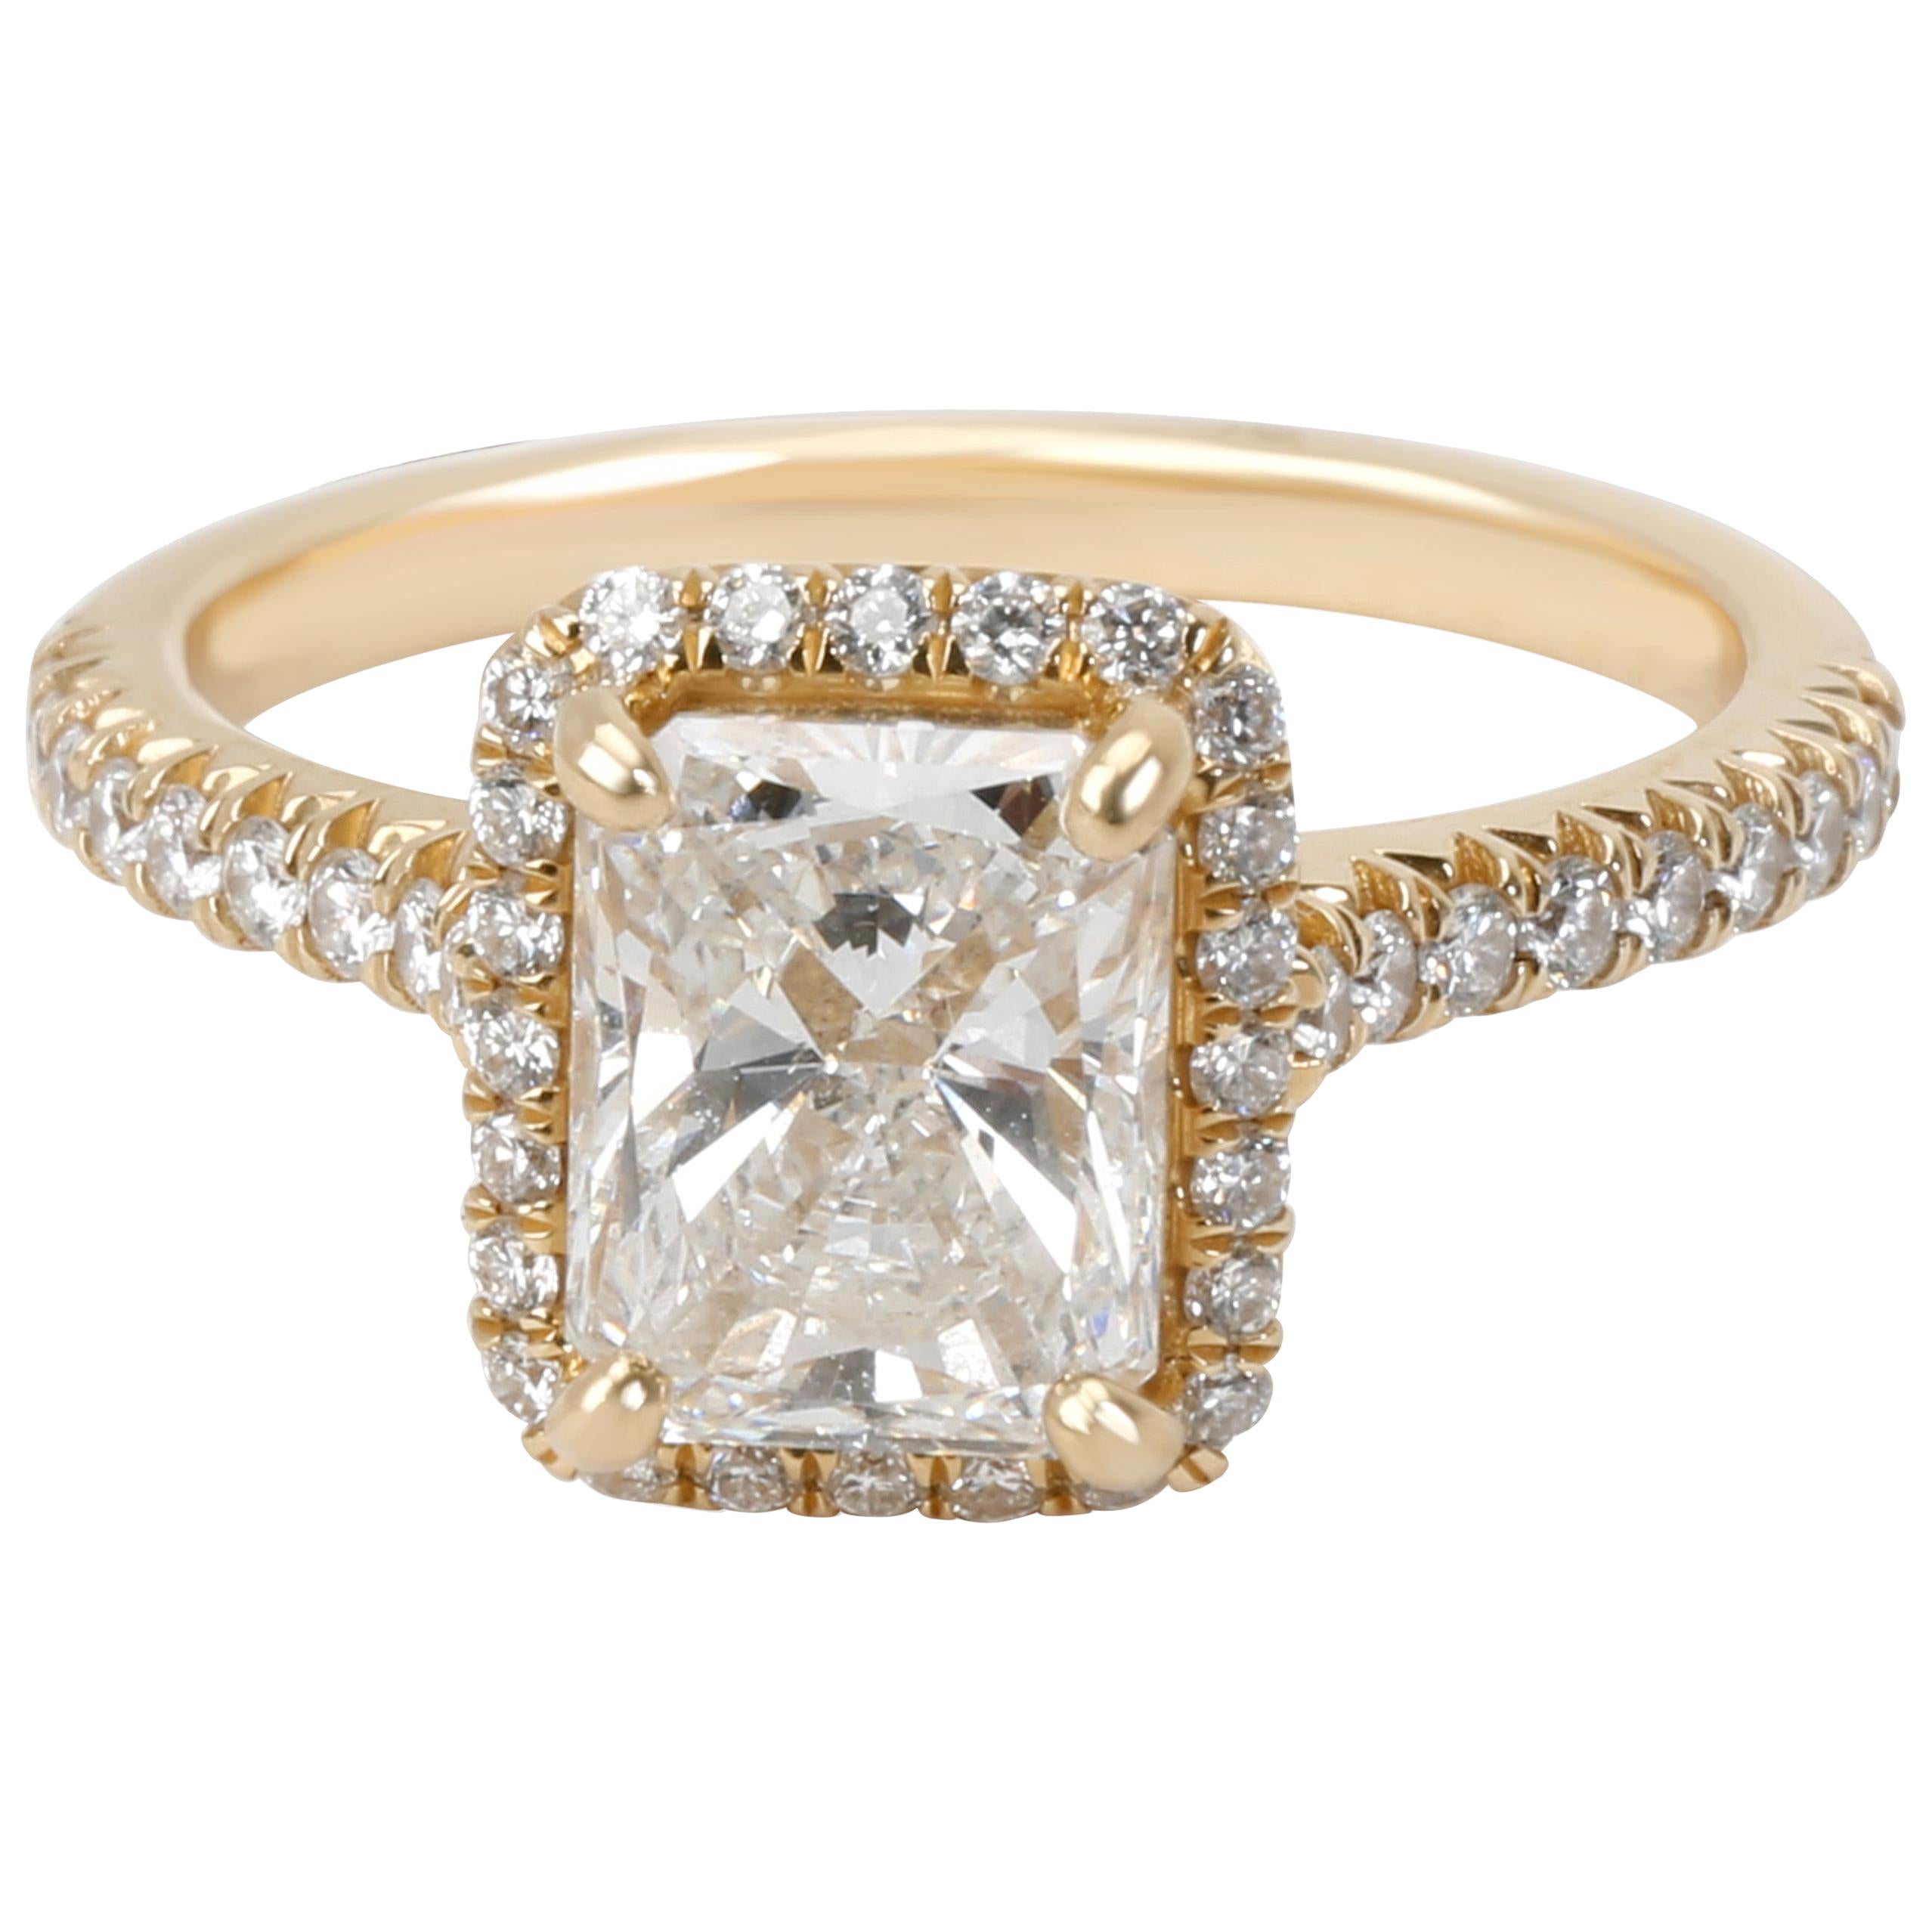 James Allen Radiant Diamond Ring in 14 Karat Gold GIA E VS2 1.91 Carat